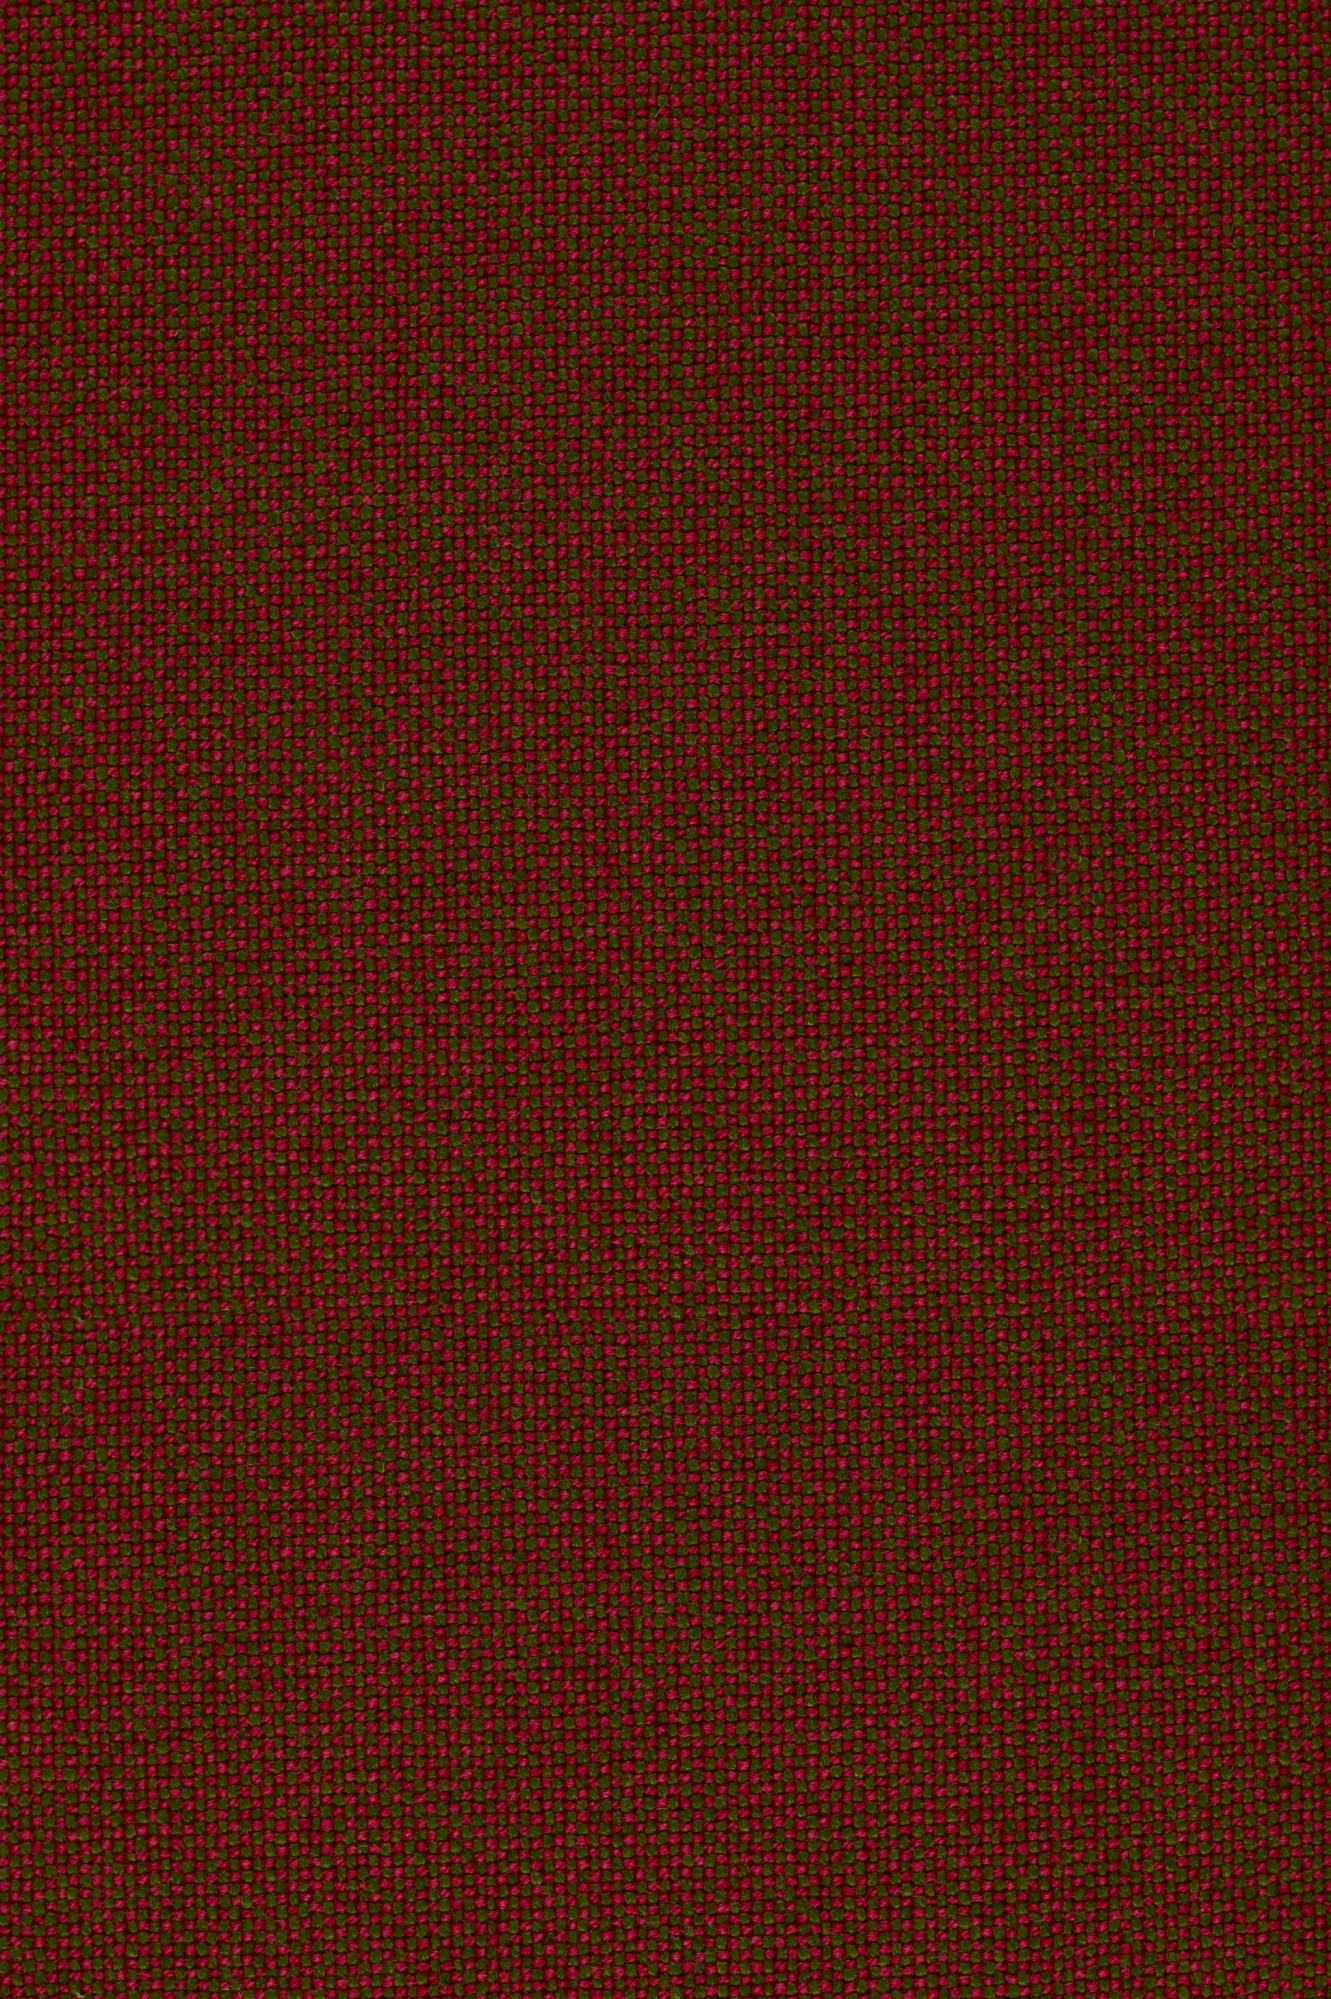 Fabric sample Hallingdal 65 660 red